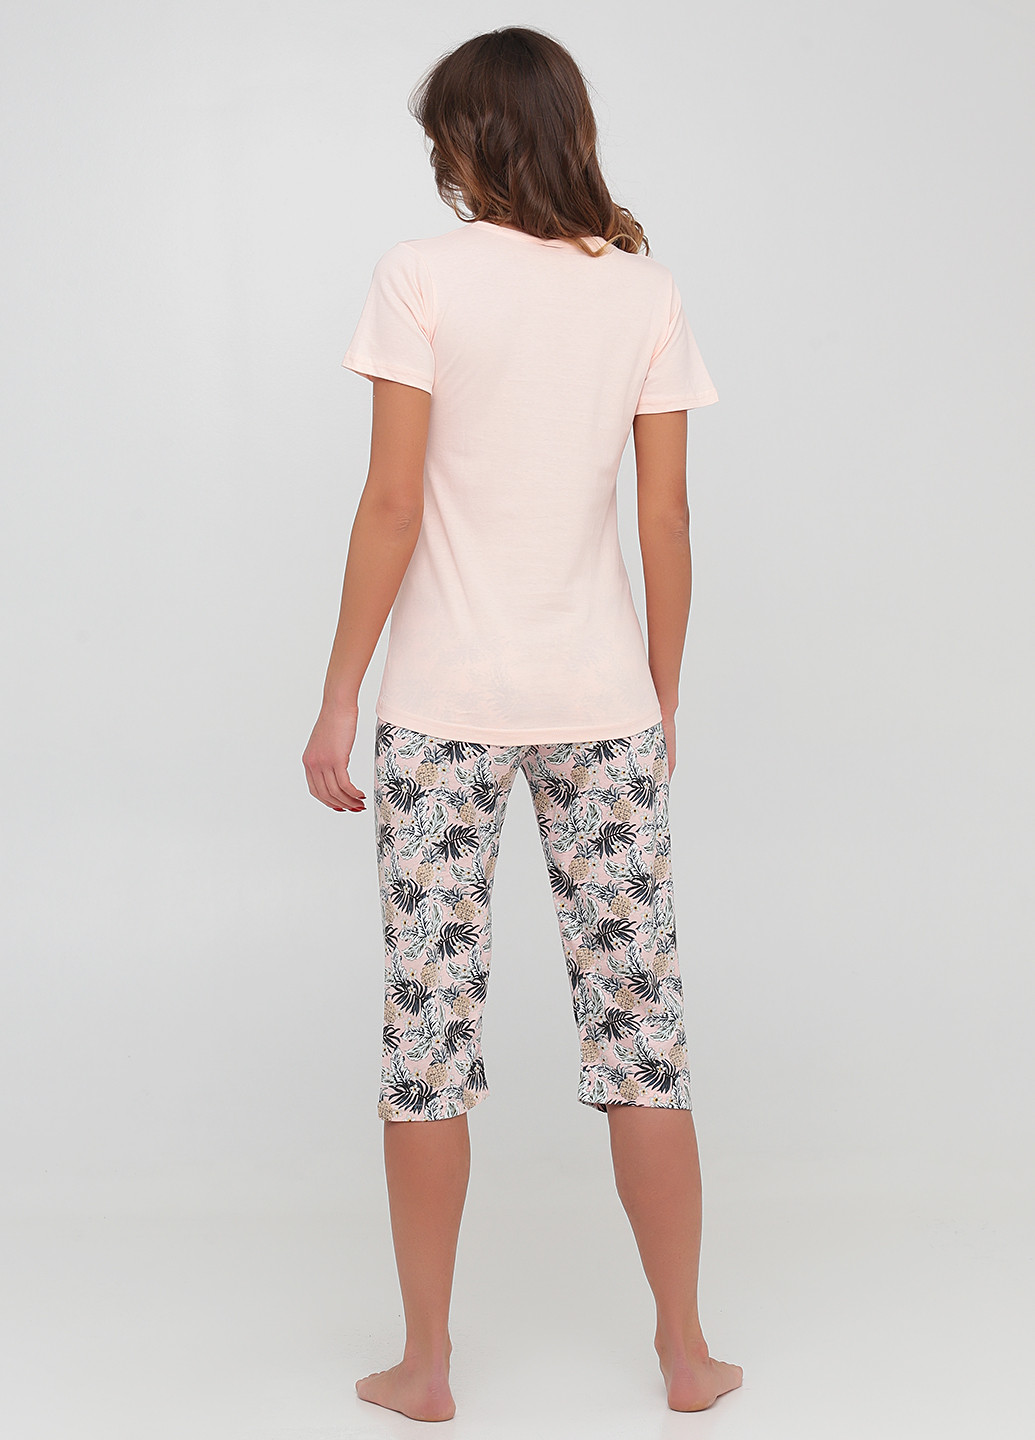 Персиковая всесезон пижама (футболка, бриджи) футболка + бриджи Boyraz